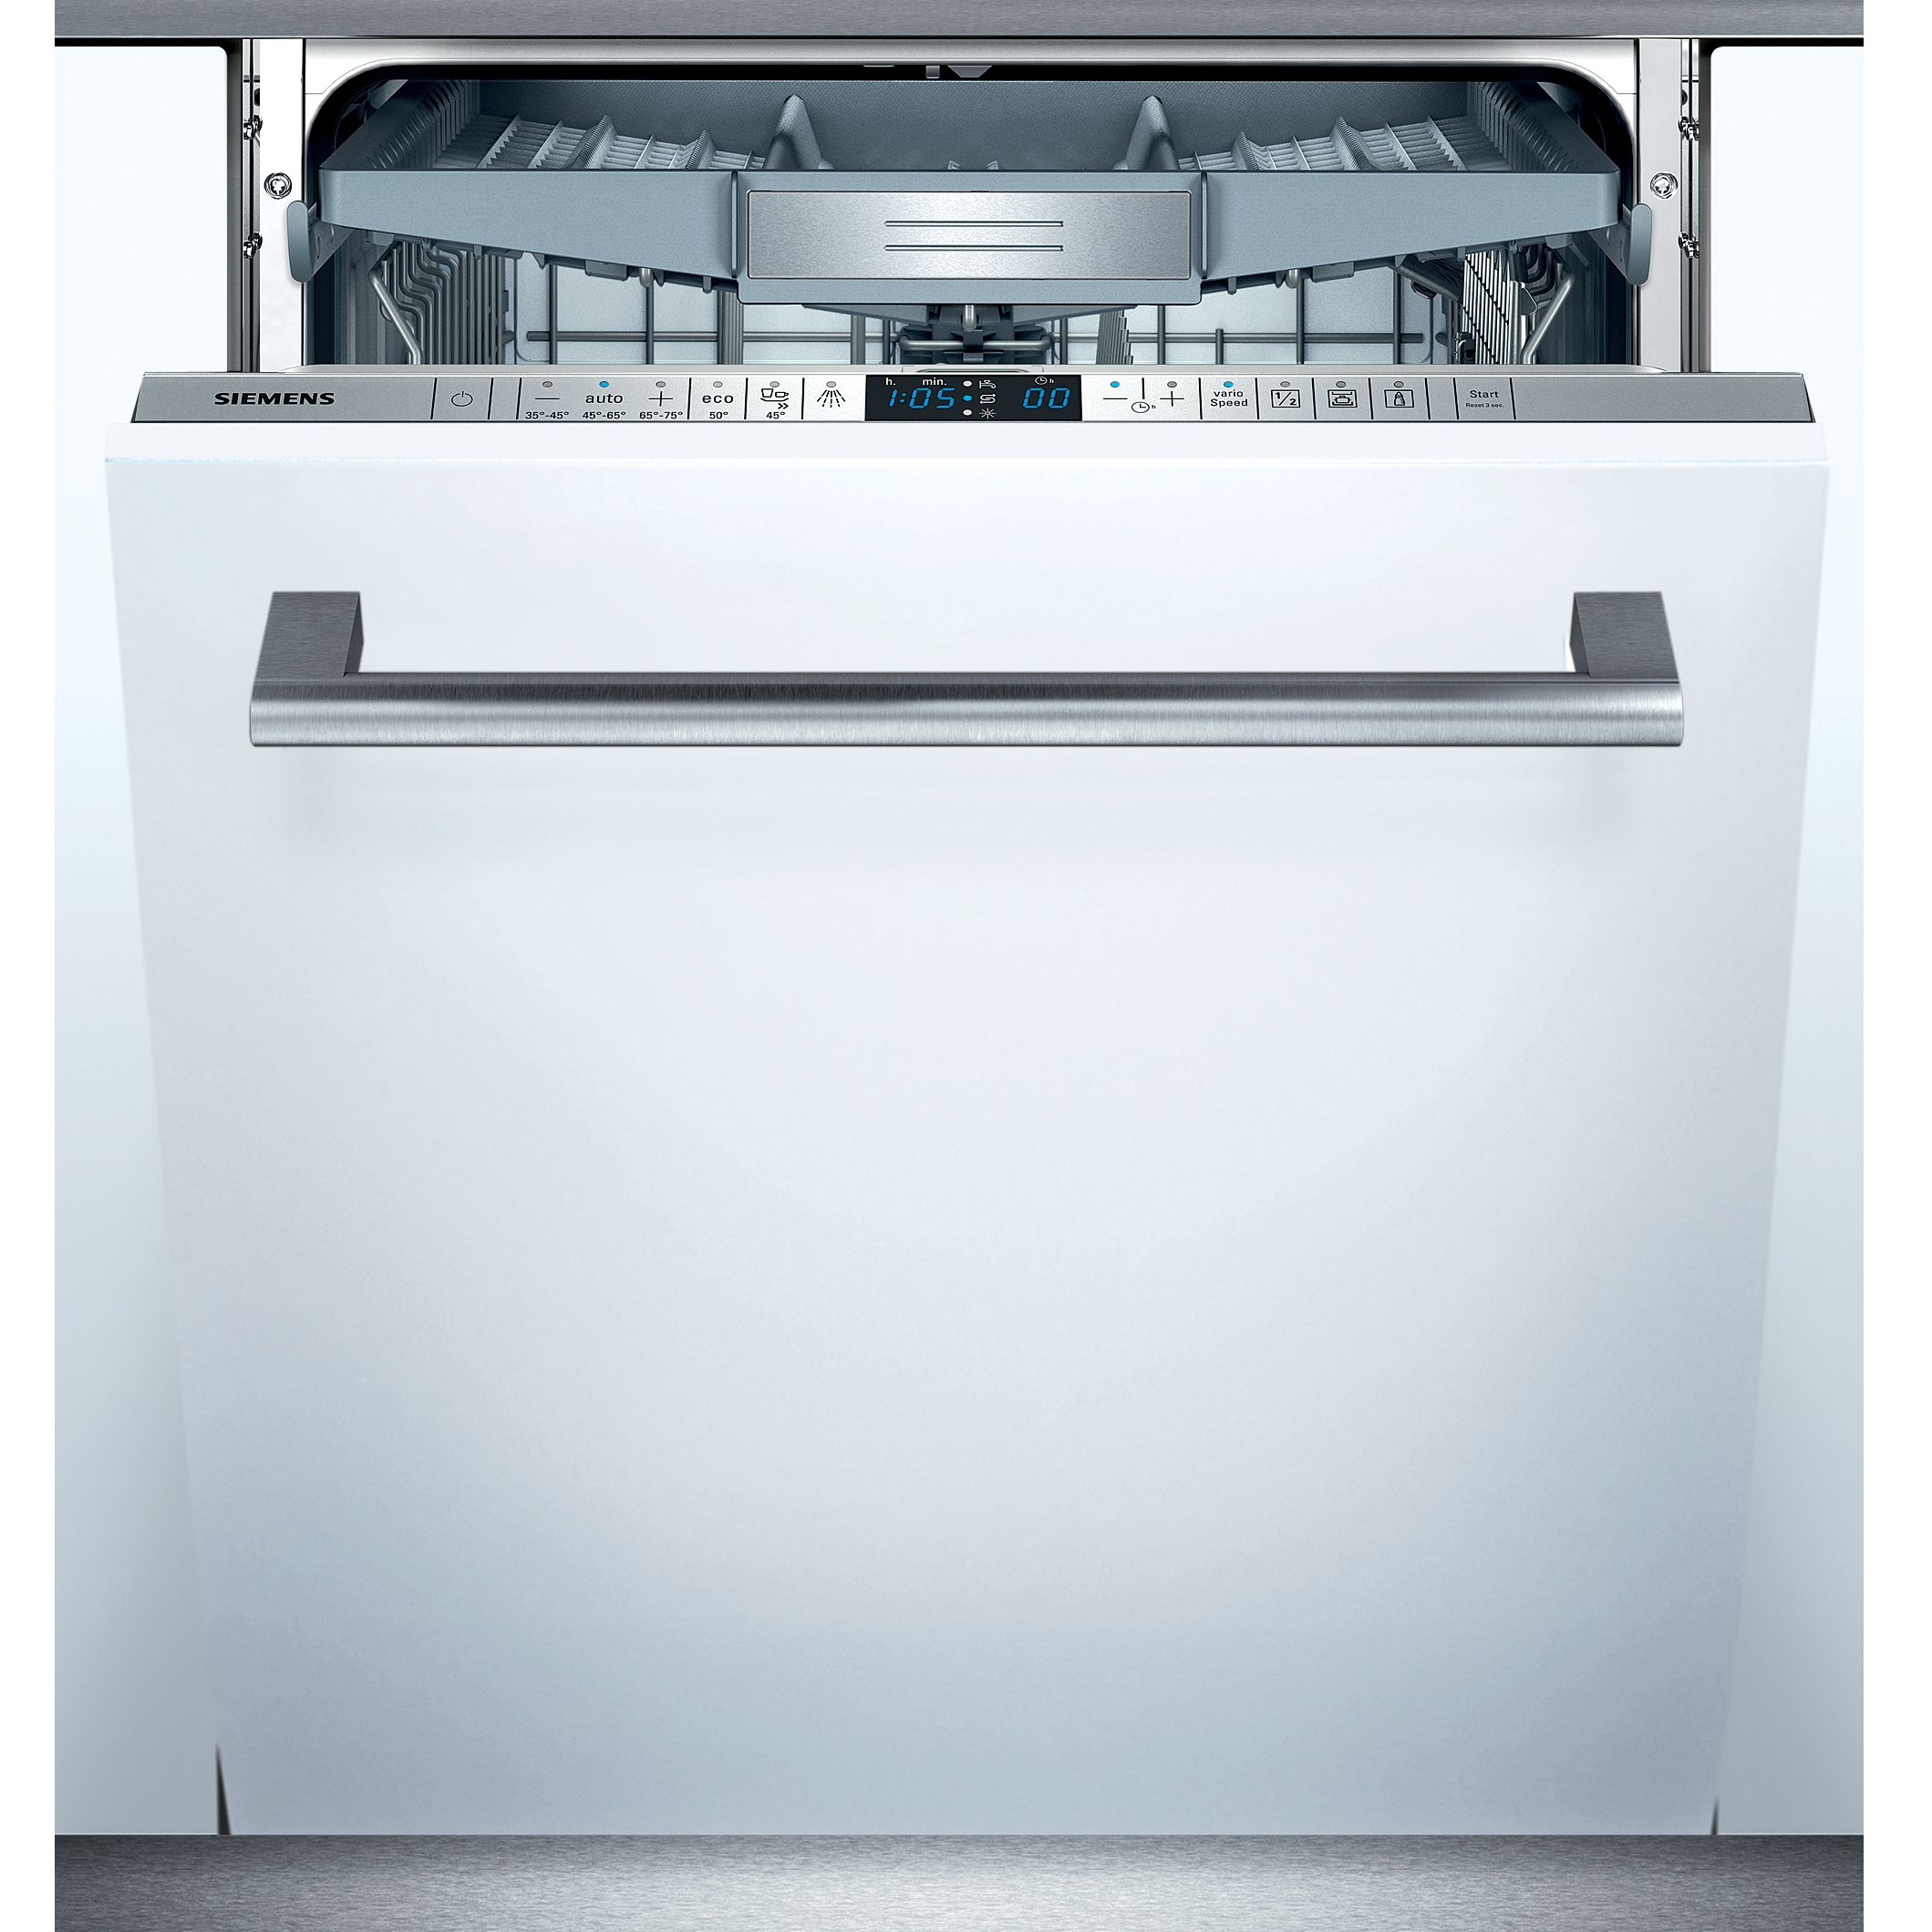 Siemens SNN66T091GB Integrated Dishwasher, White at JohnLewis